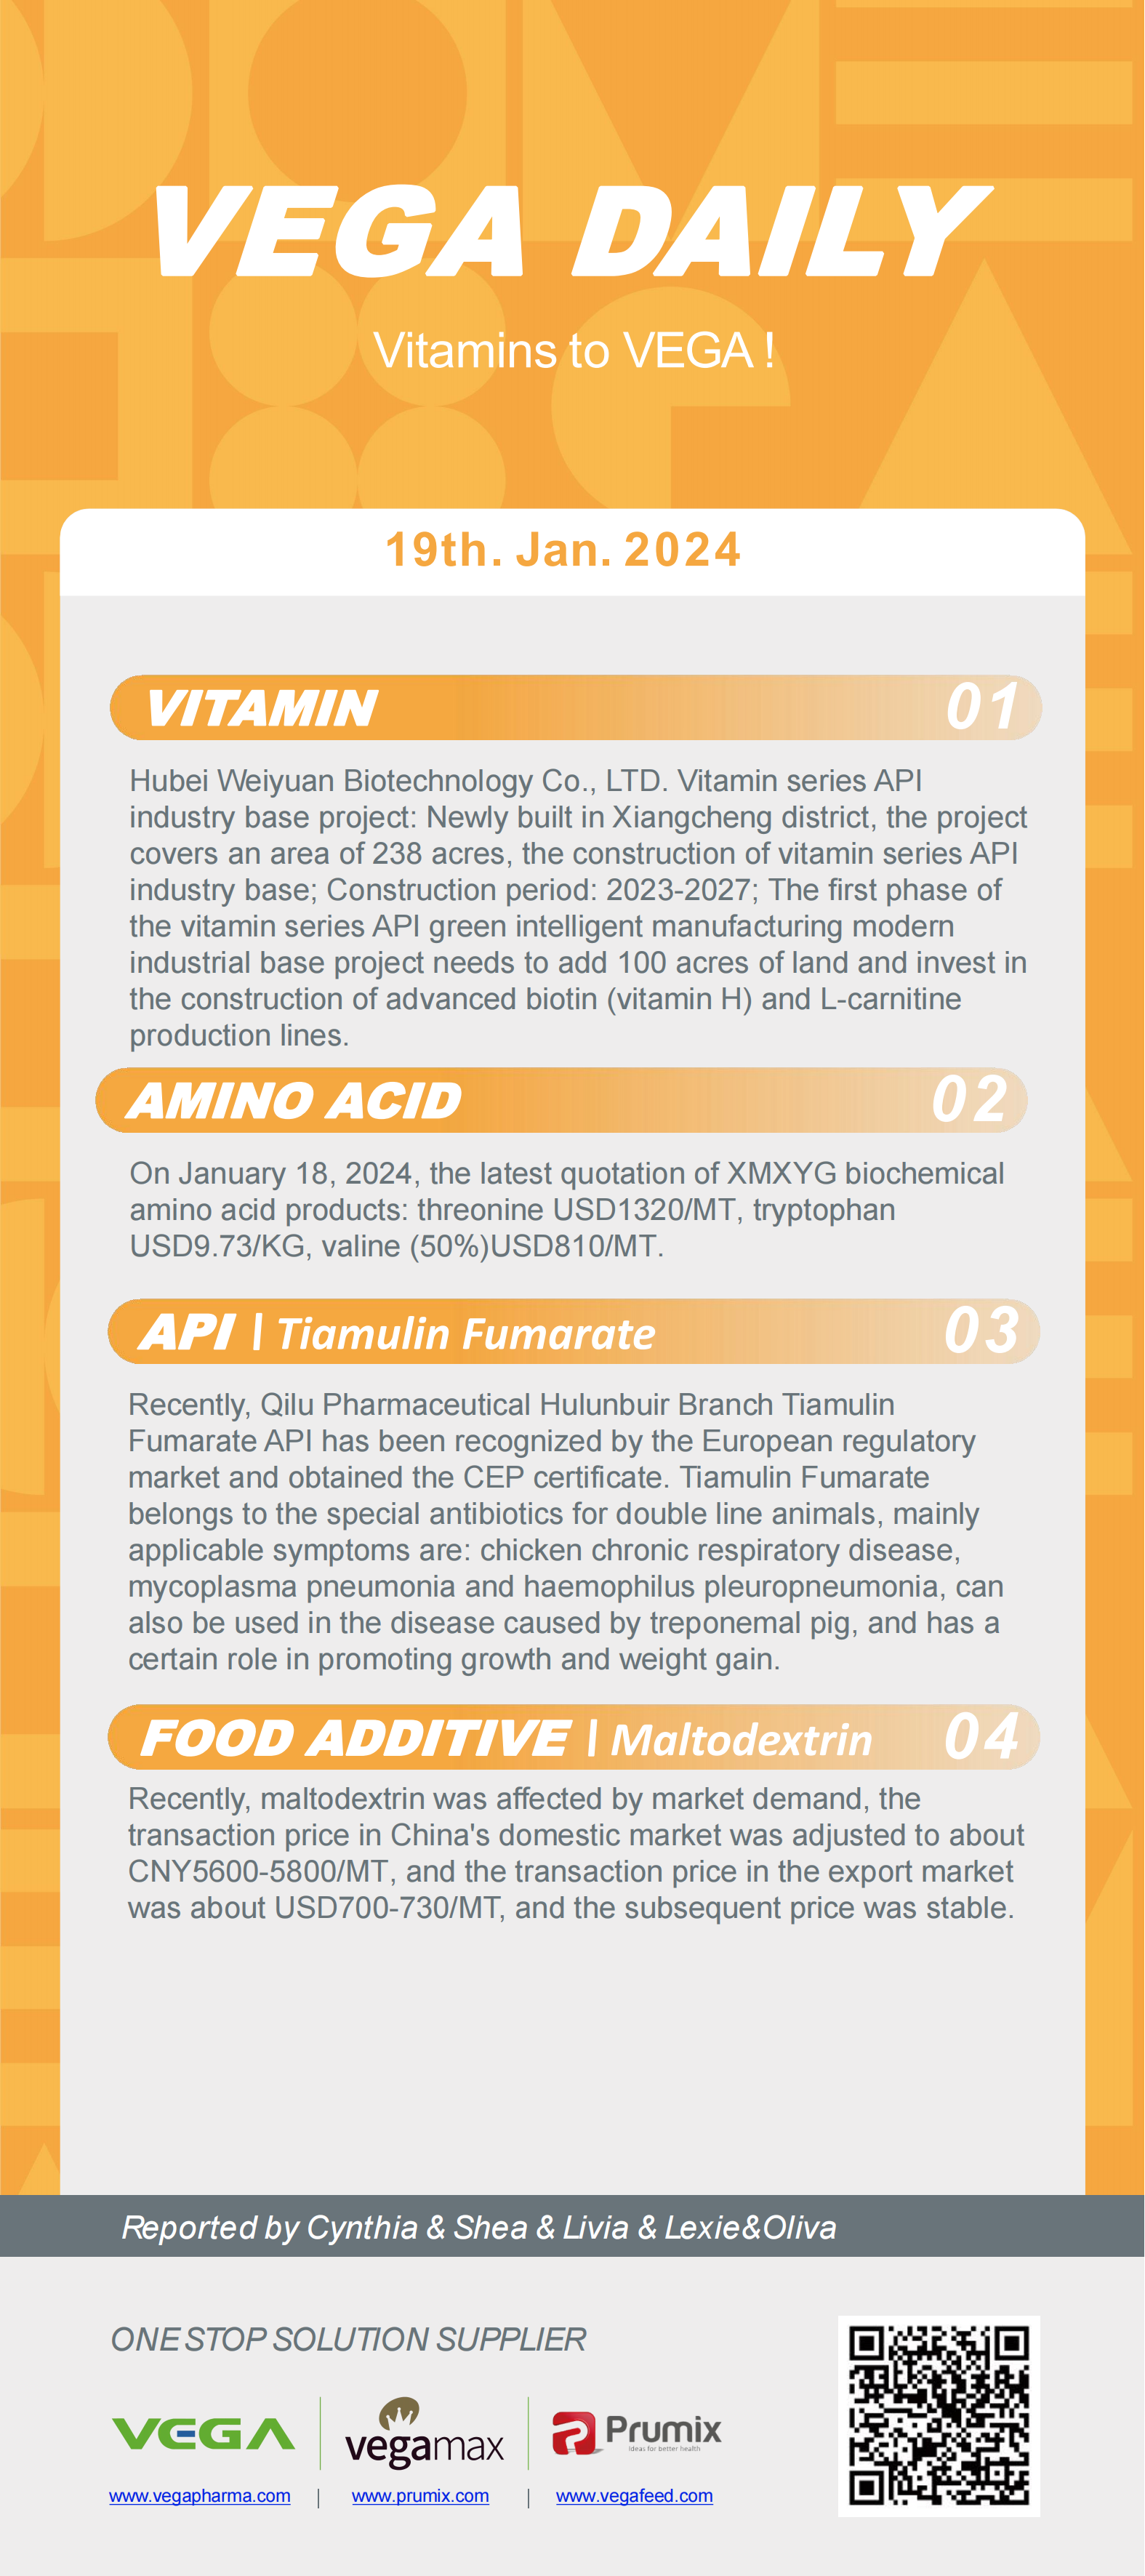 Vega Daily Dated on Jan 19th 2024 Vitamin Amino Acid APl Food Additives.png